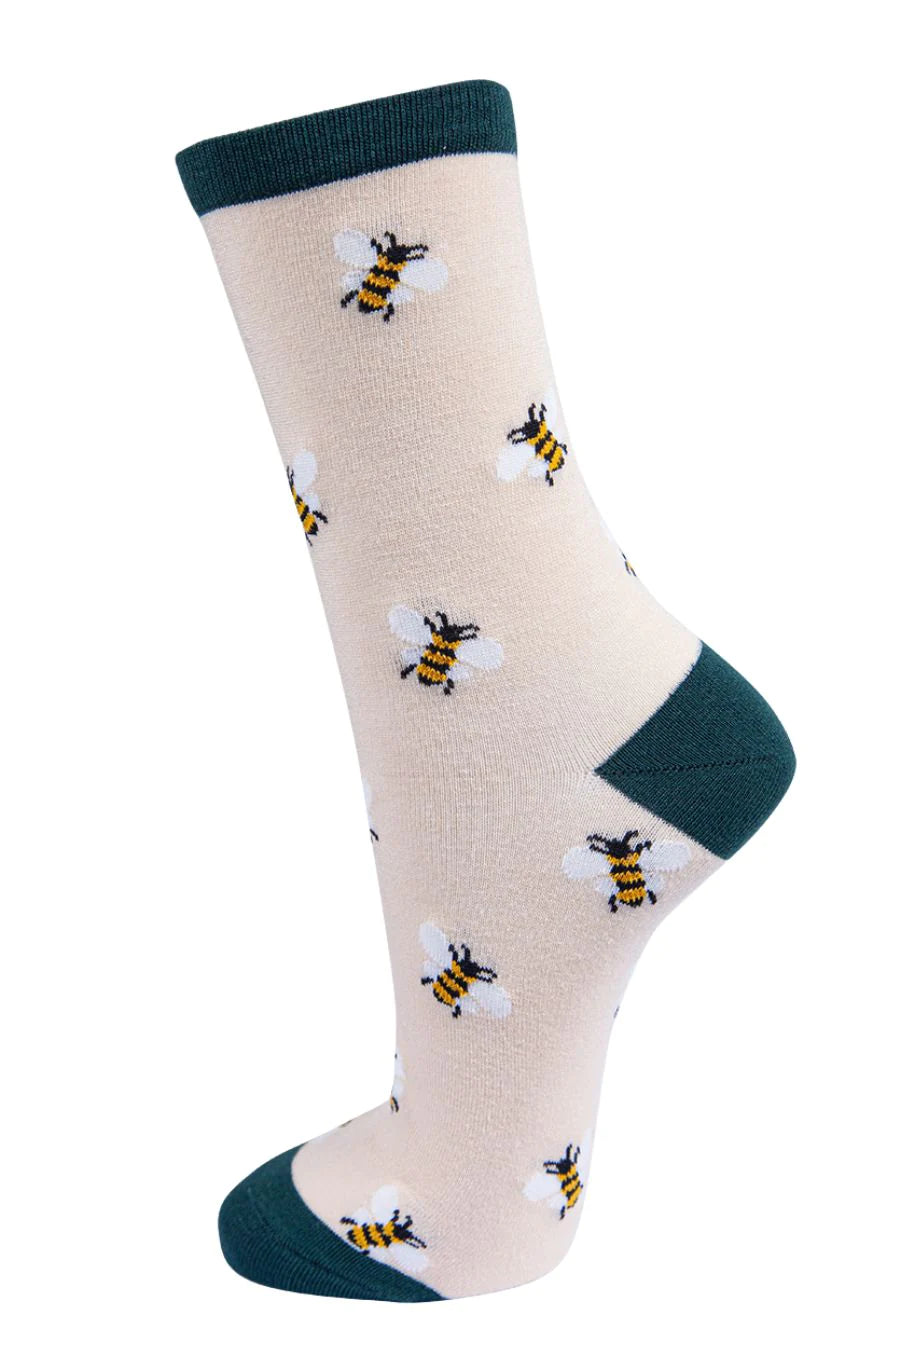 Bumblebee Socks in Soft Bamboo